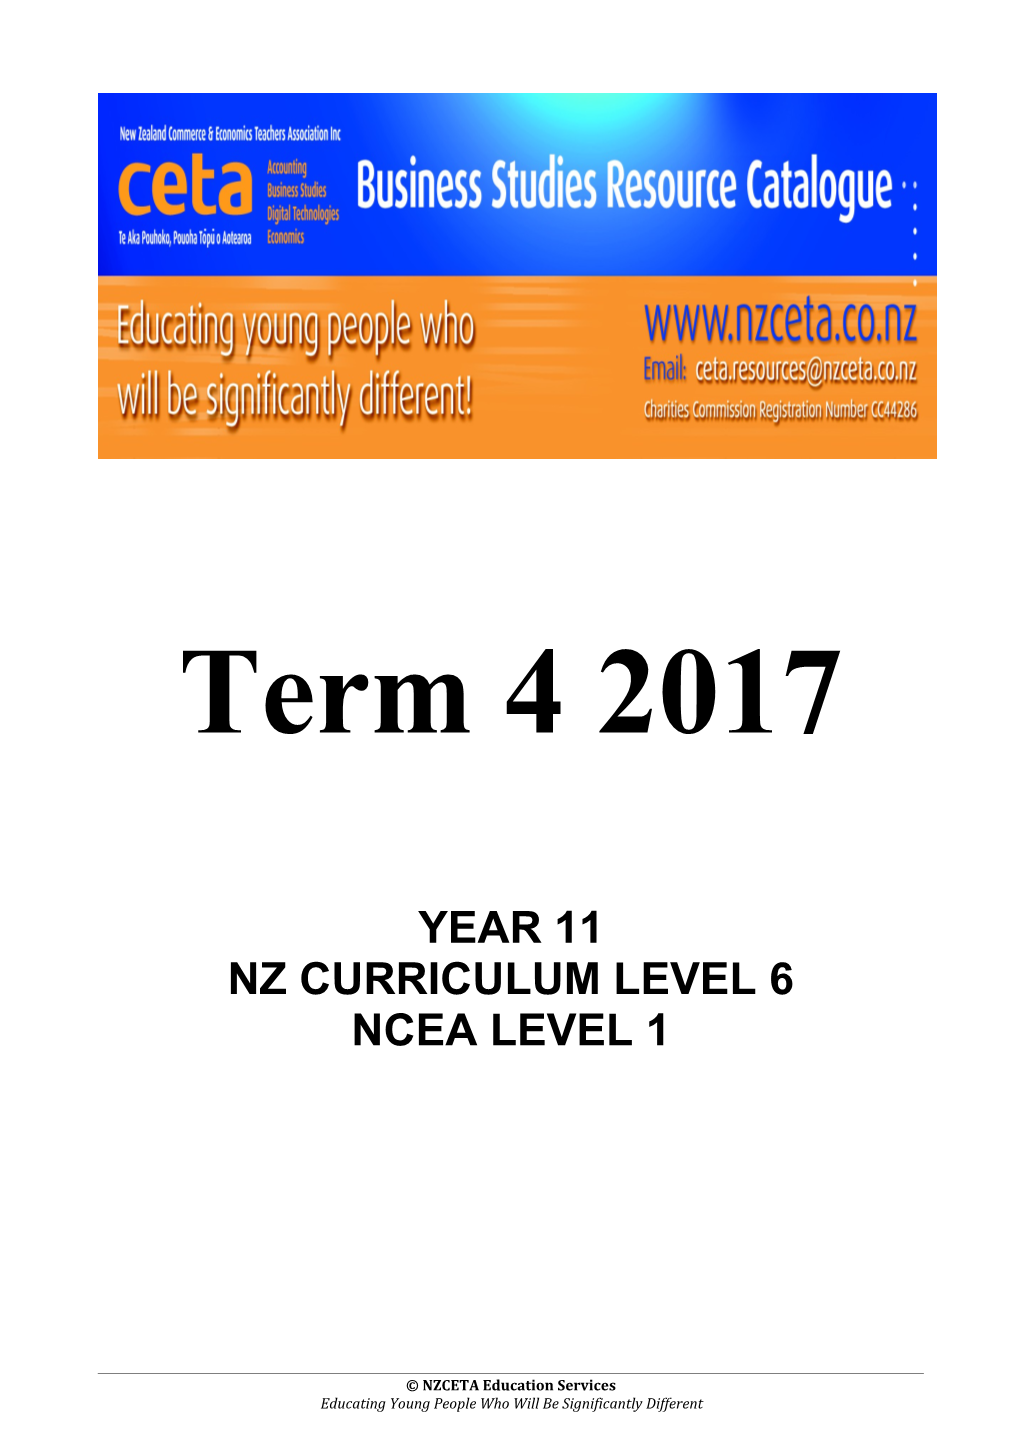 Nz Curriculum Level 6